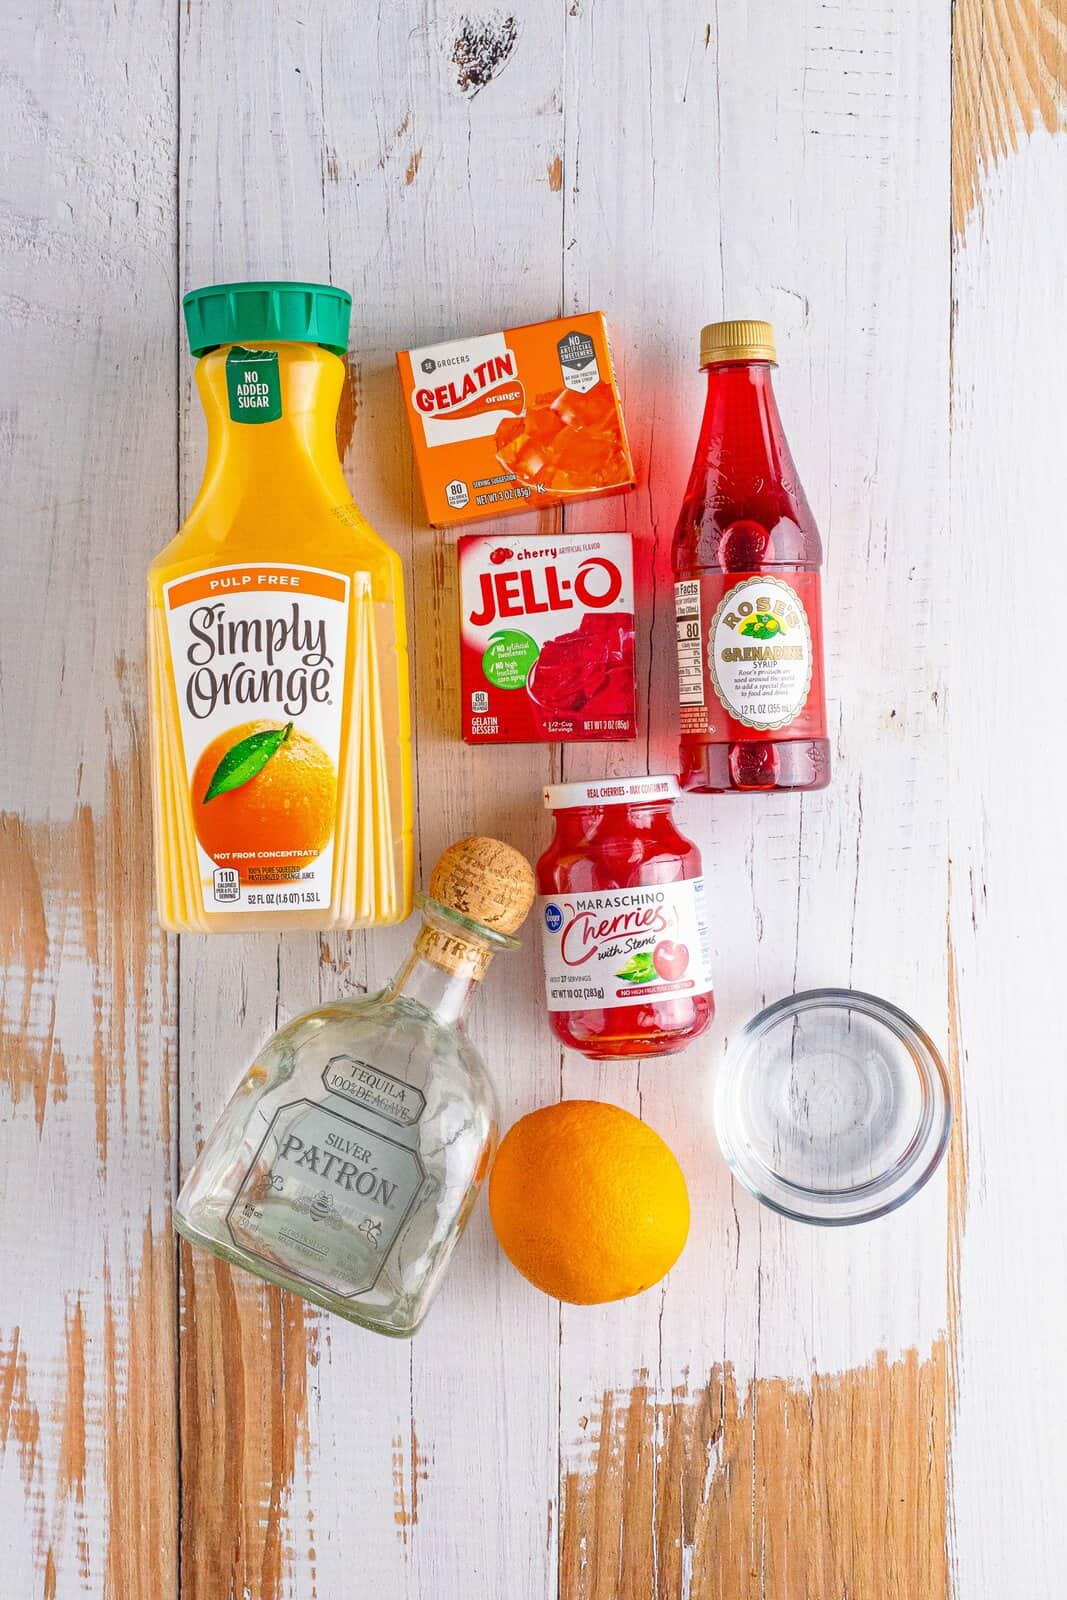 Orange juice, grenadine, oranges, tequila, water, cherry and orange Jell-O, and cherries. 